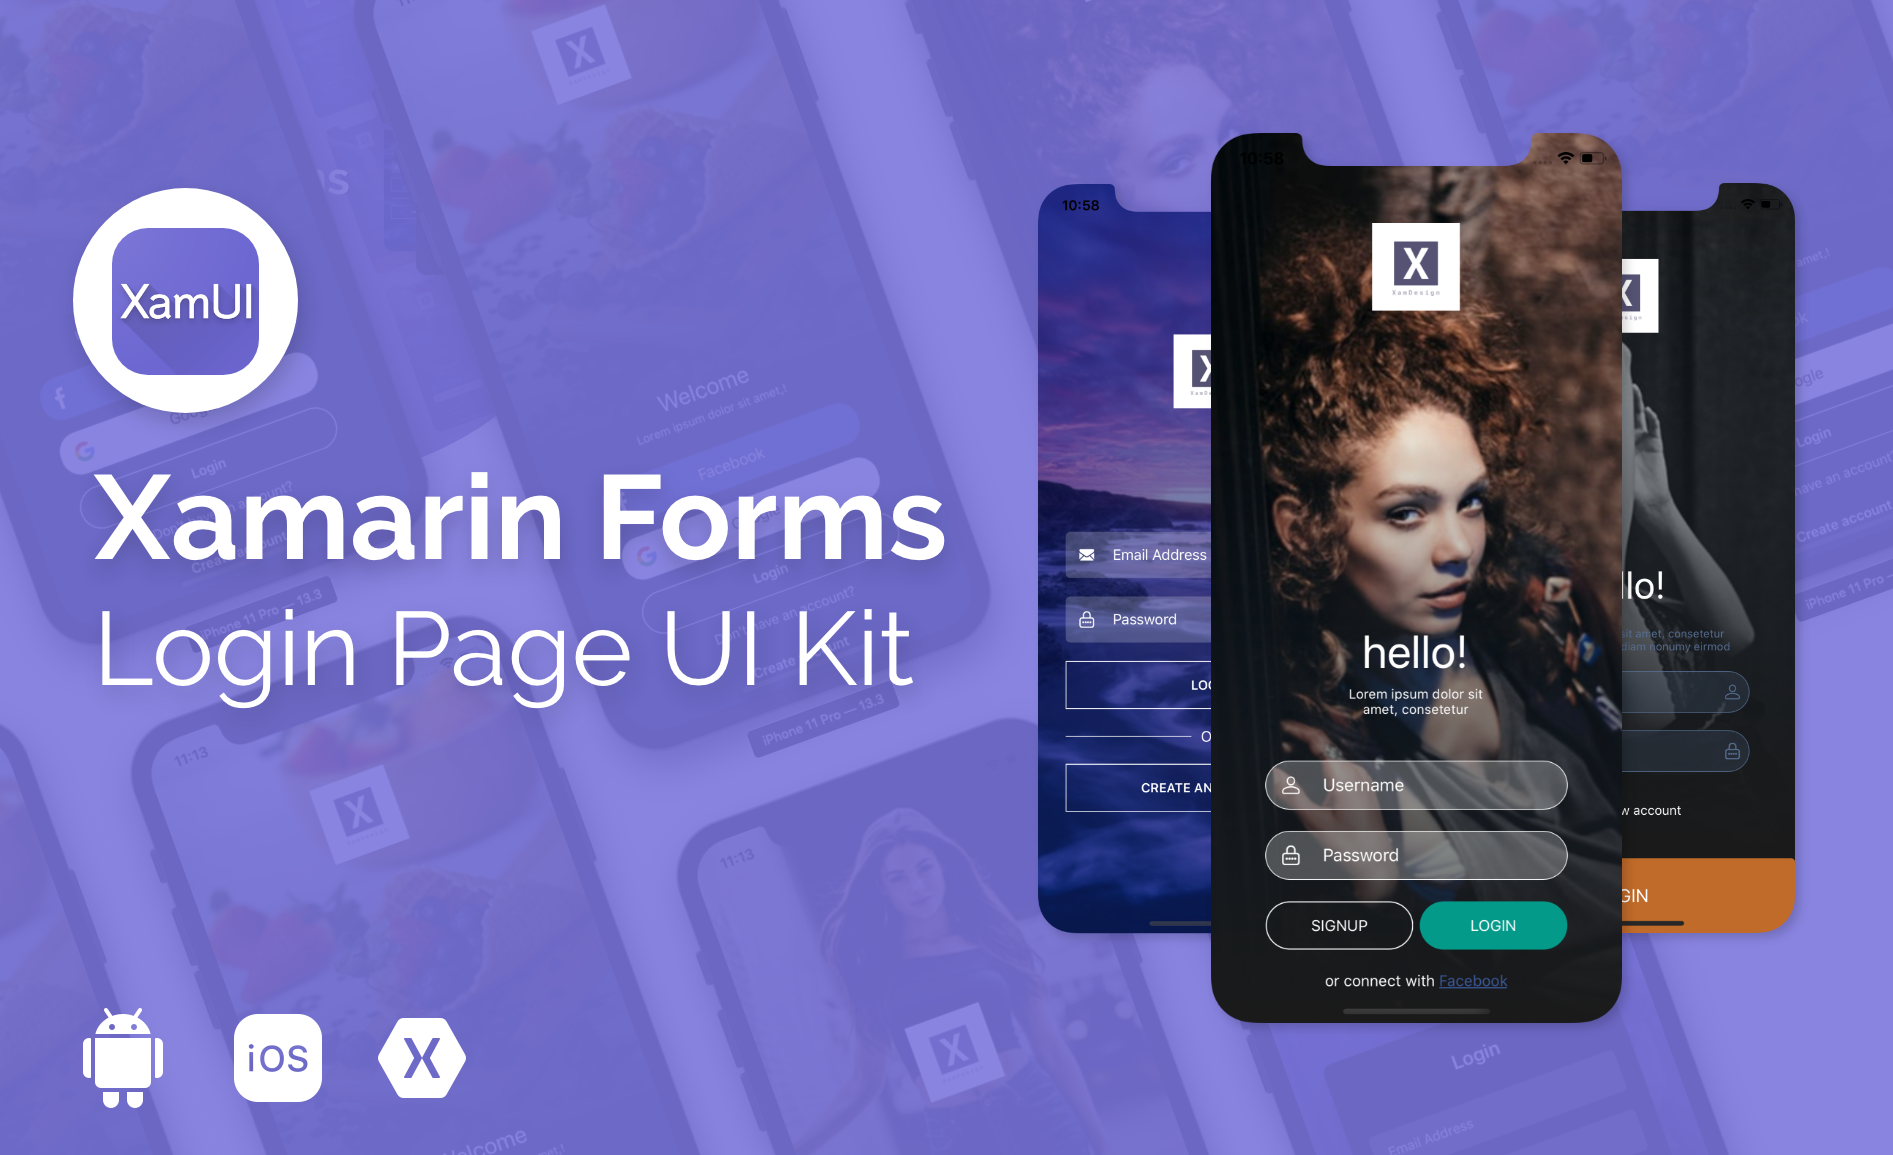 XamUI Xamarin Forms Login Page UI Kit ( Android & iOS ) - 1